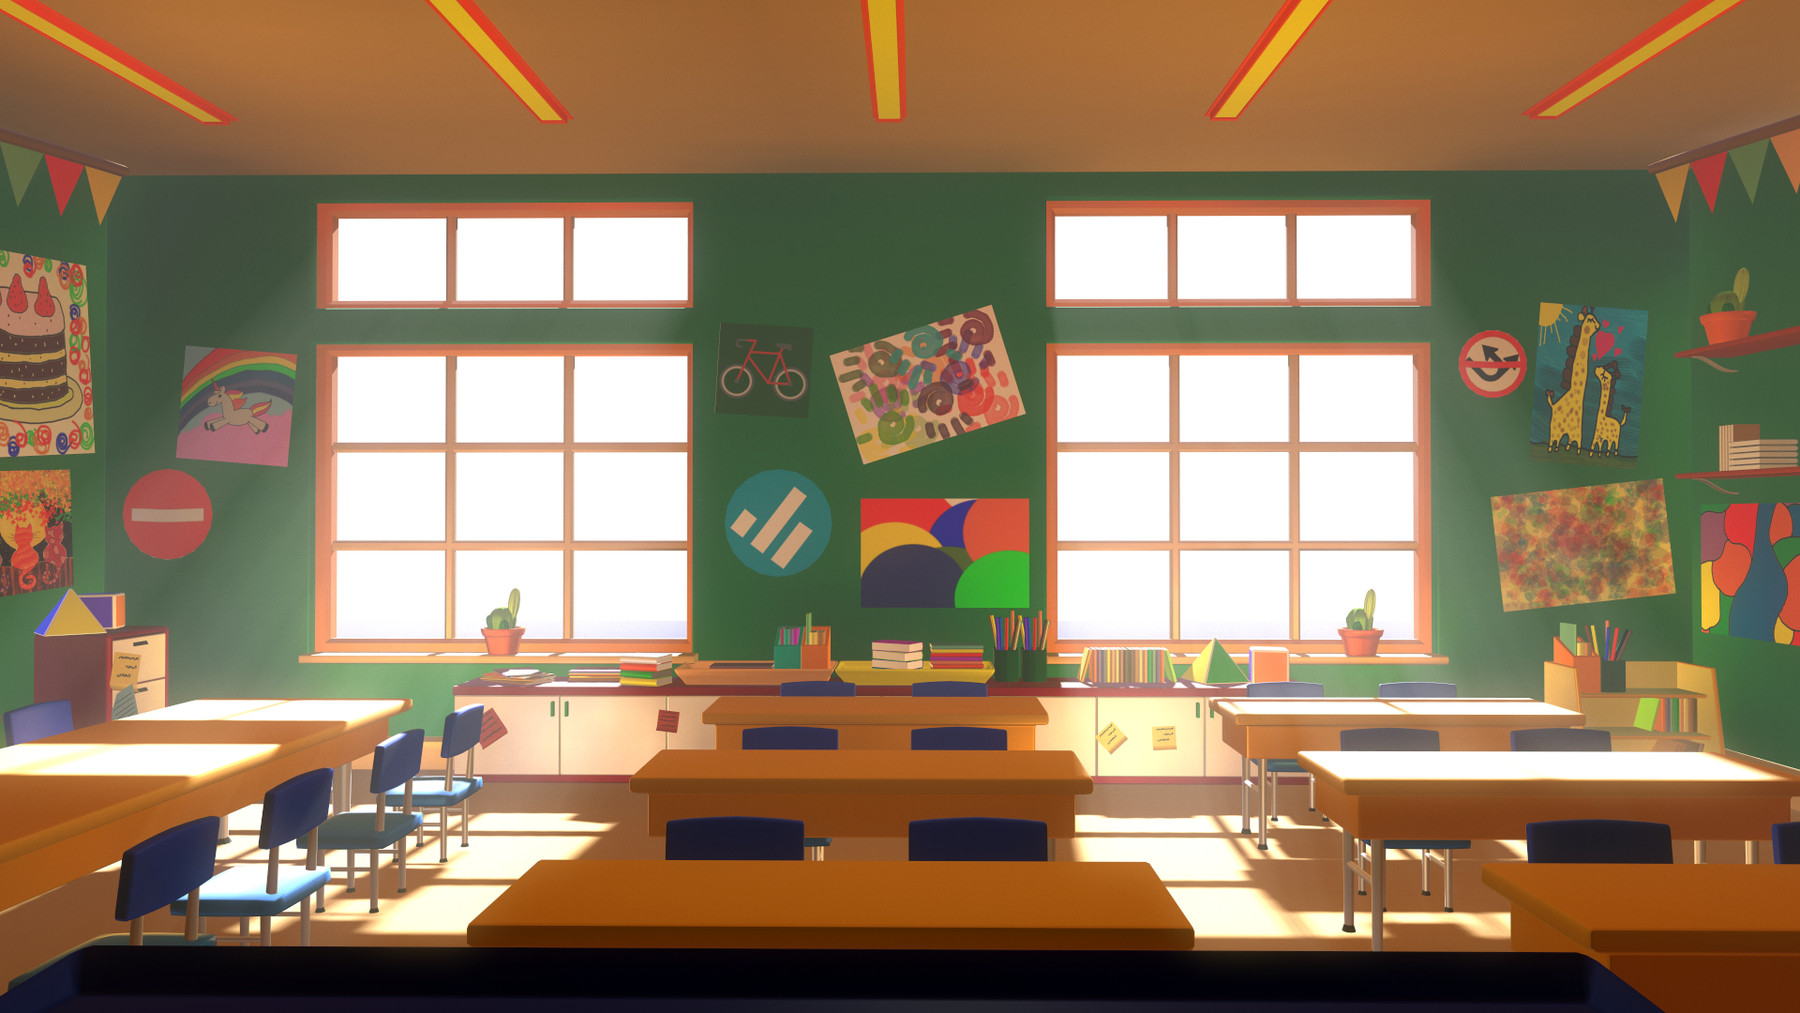 ArtStation - Asset - Cartoons - Background - Classroom ...